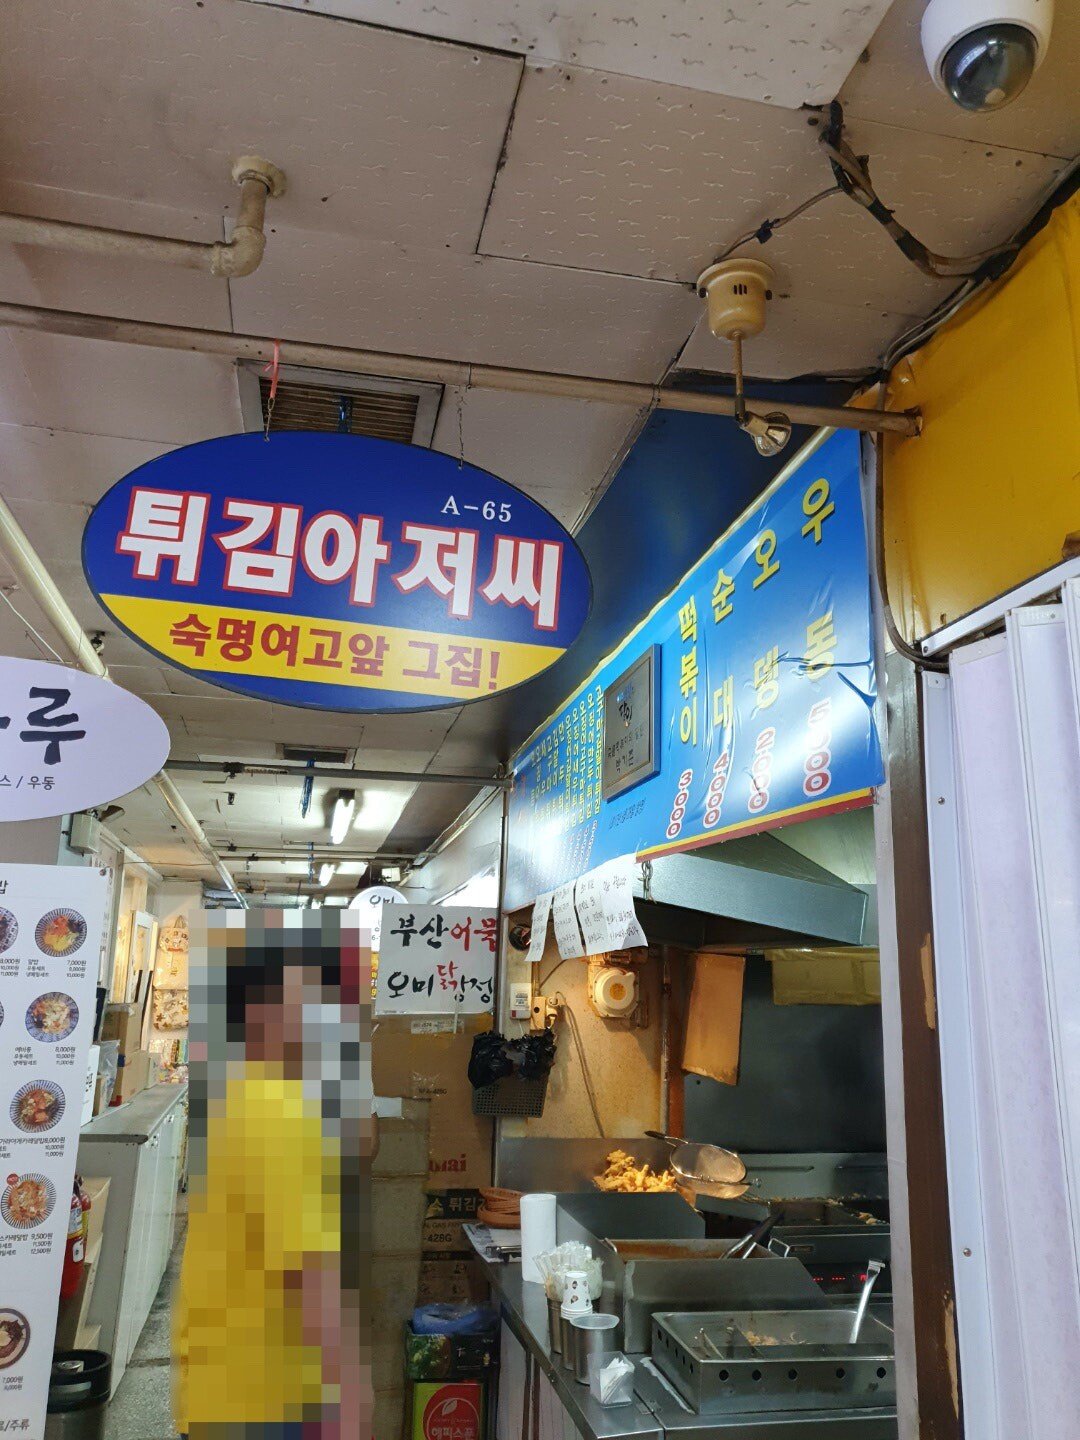 KakaoTalk_Image_2020-08-25-18-02-41_013.jpg (스압) 서울 강남 지역 음식점 방문기 -7-